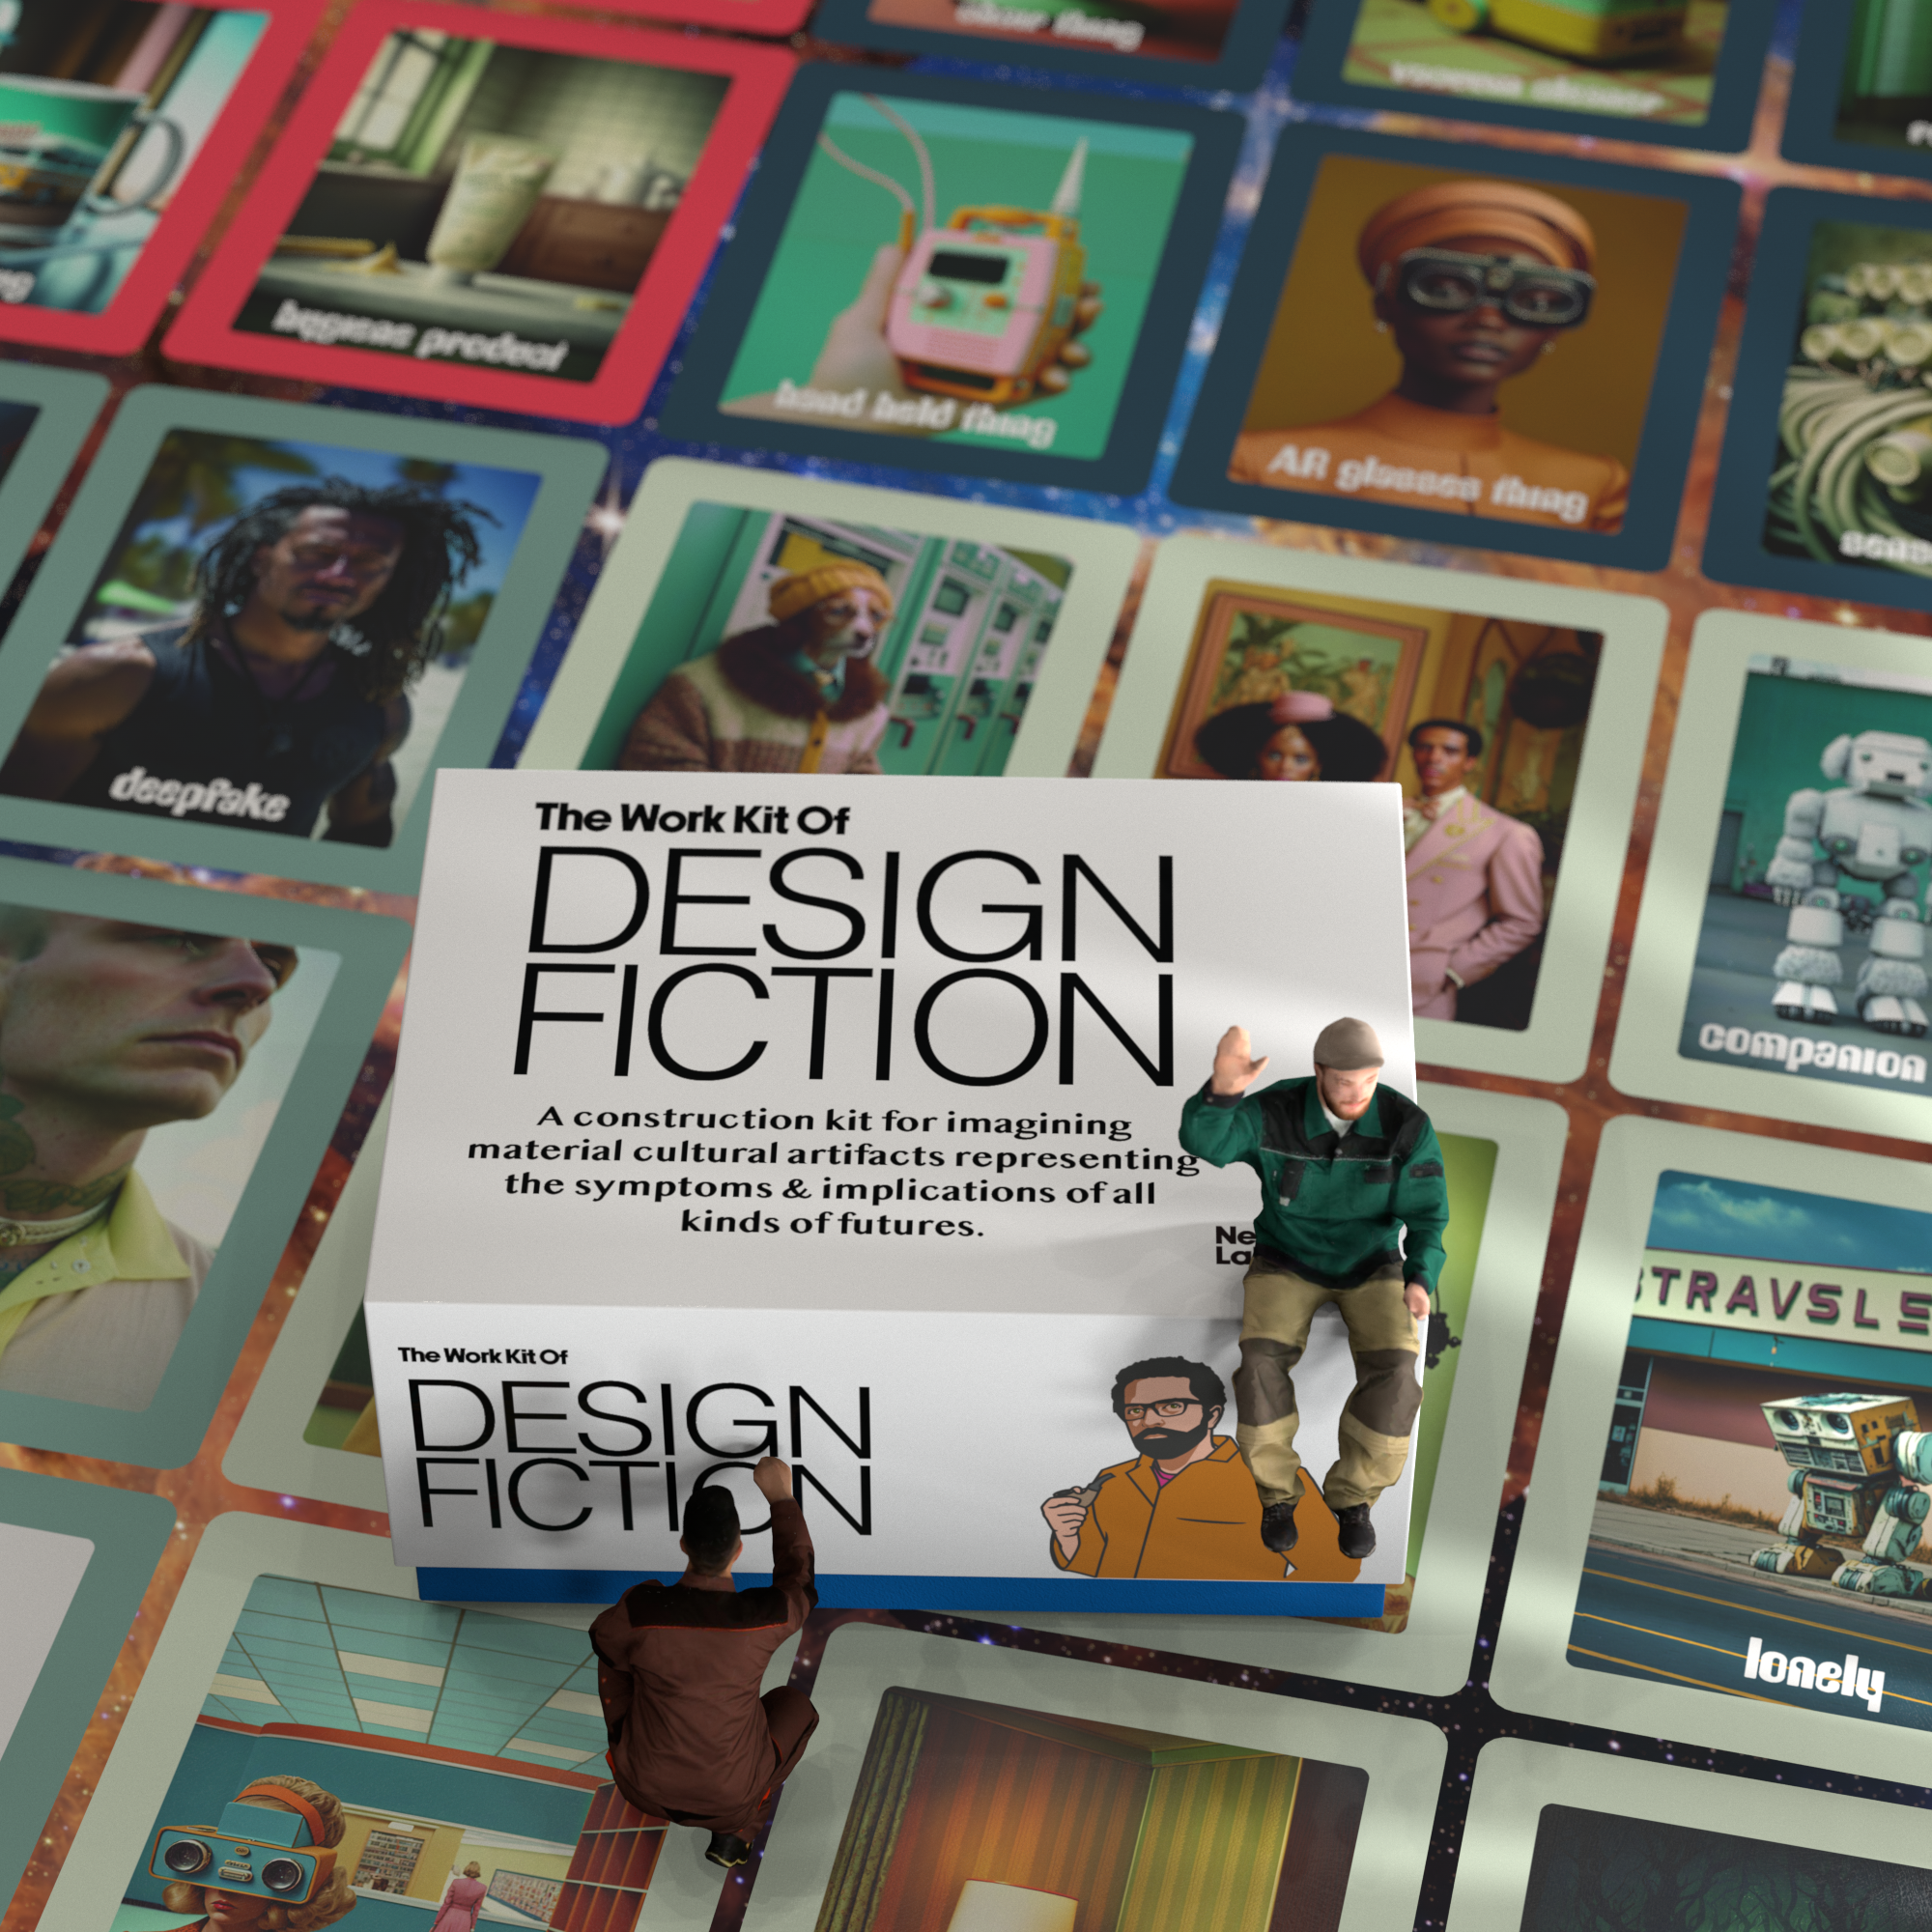 The Work Kit of Design Fiction — New Augmented u0026 Illuminated Edition